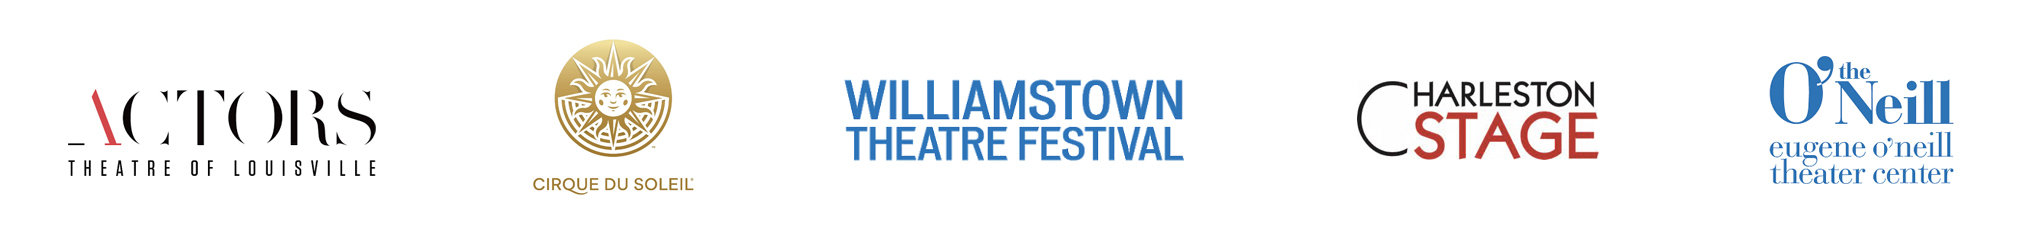 5 Alumni Theatre Logos: Williamstown Theatre Festival, Eugene ONeill Theater Center, Cirque du Soleil Charleston Stage Company, Actors Theatre of Louisville